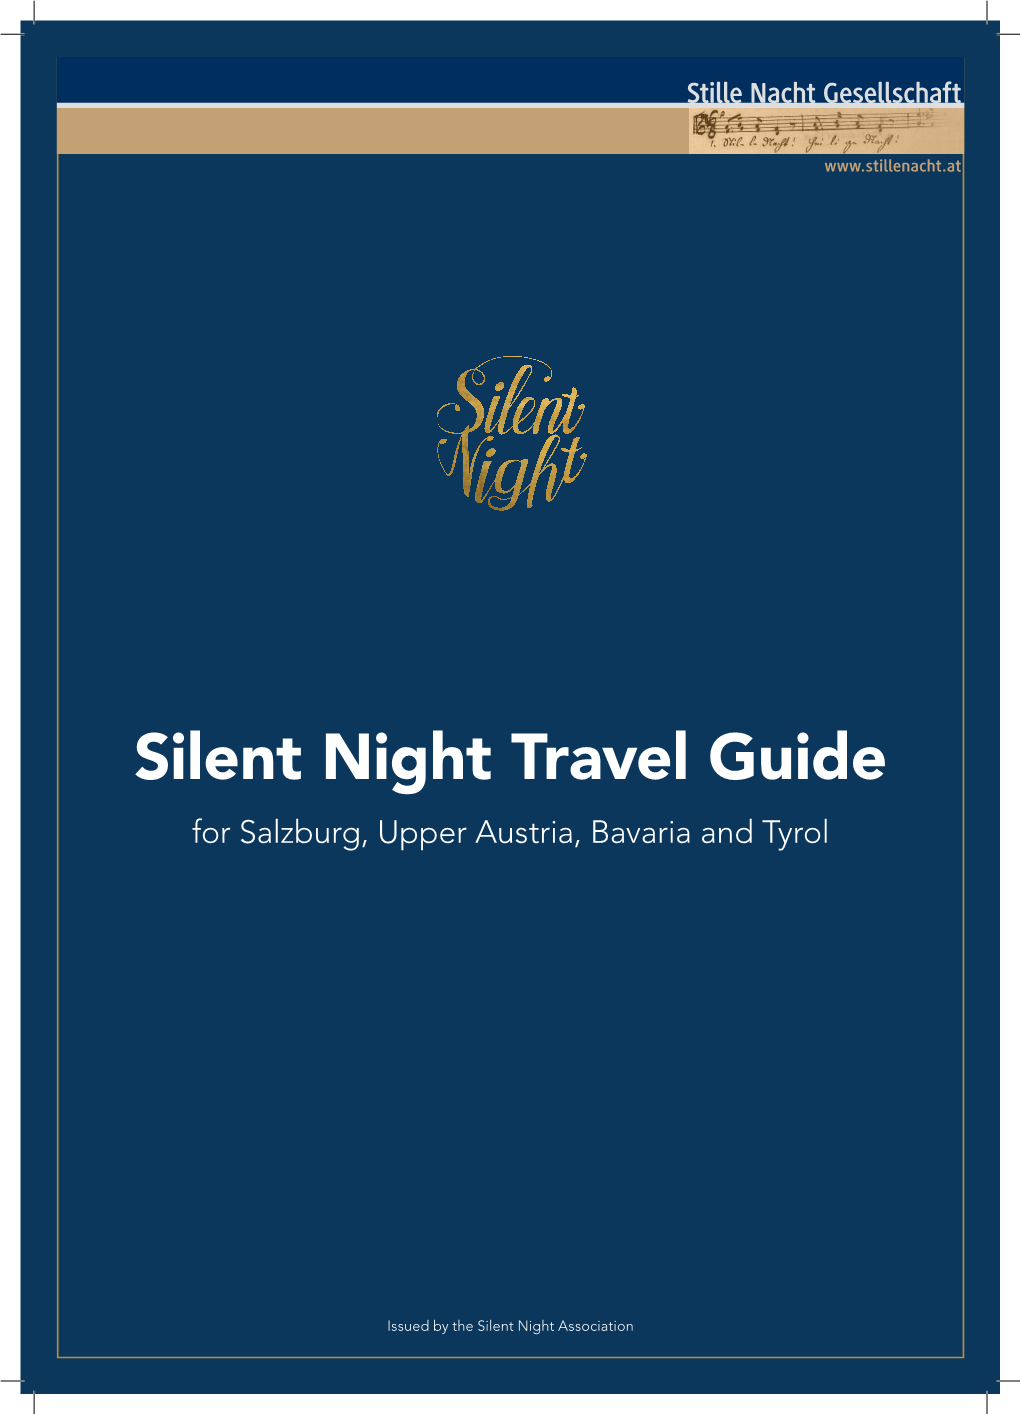 Silent Night Travel Guide for Salzburg, Upper Austria, Bavaria and Tyrol